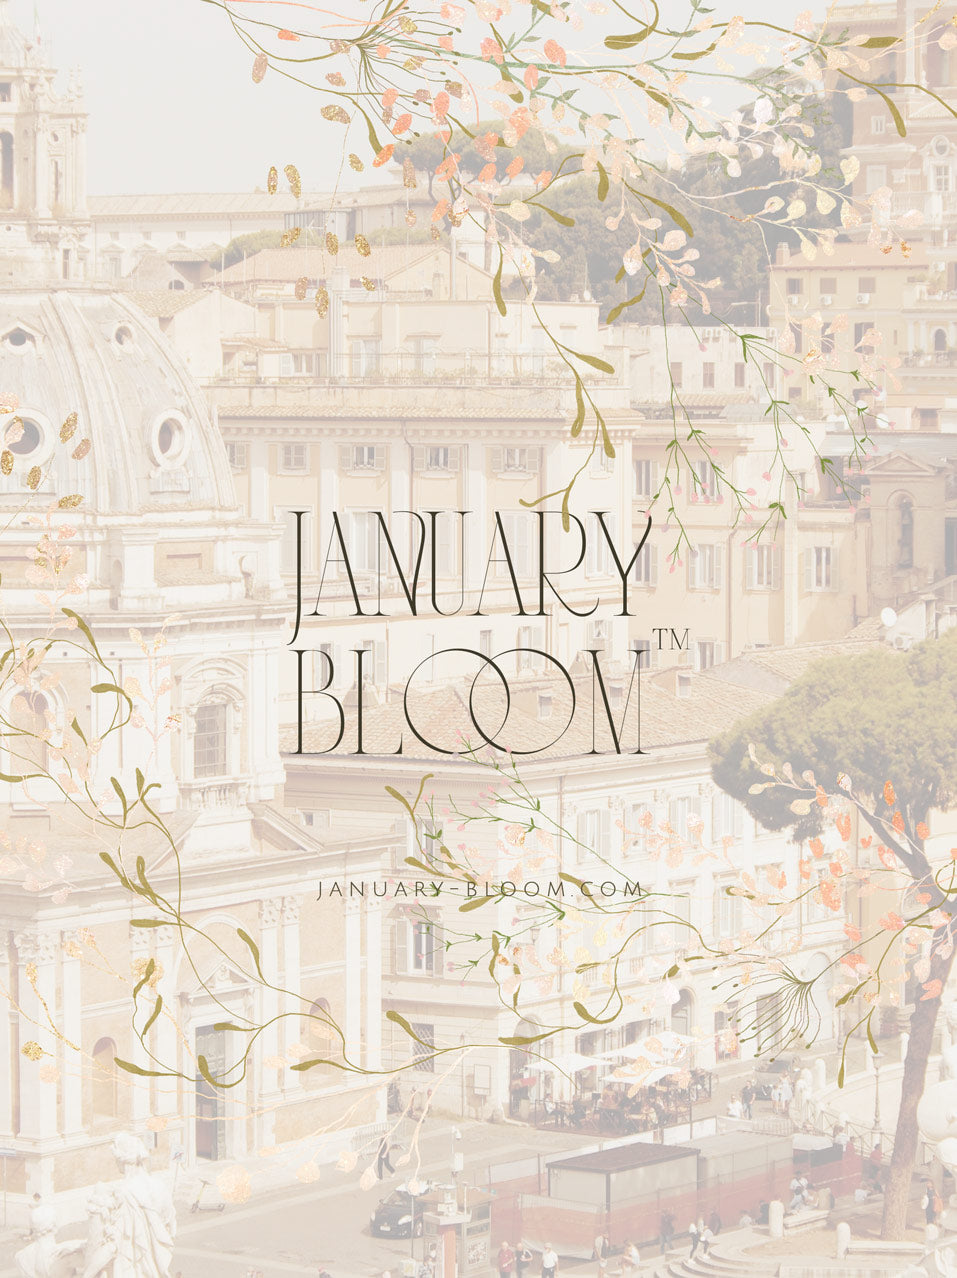 January Bloom | Wilder Garten - ANA & YVY